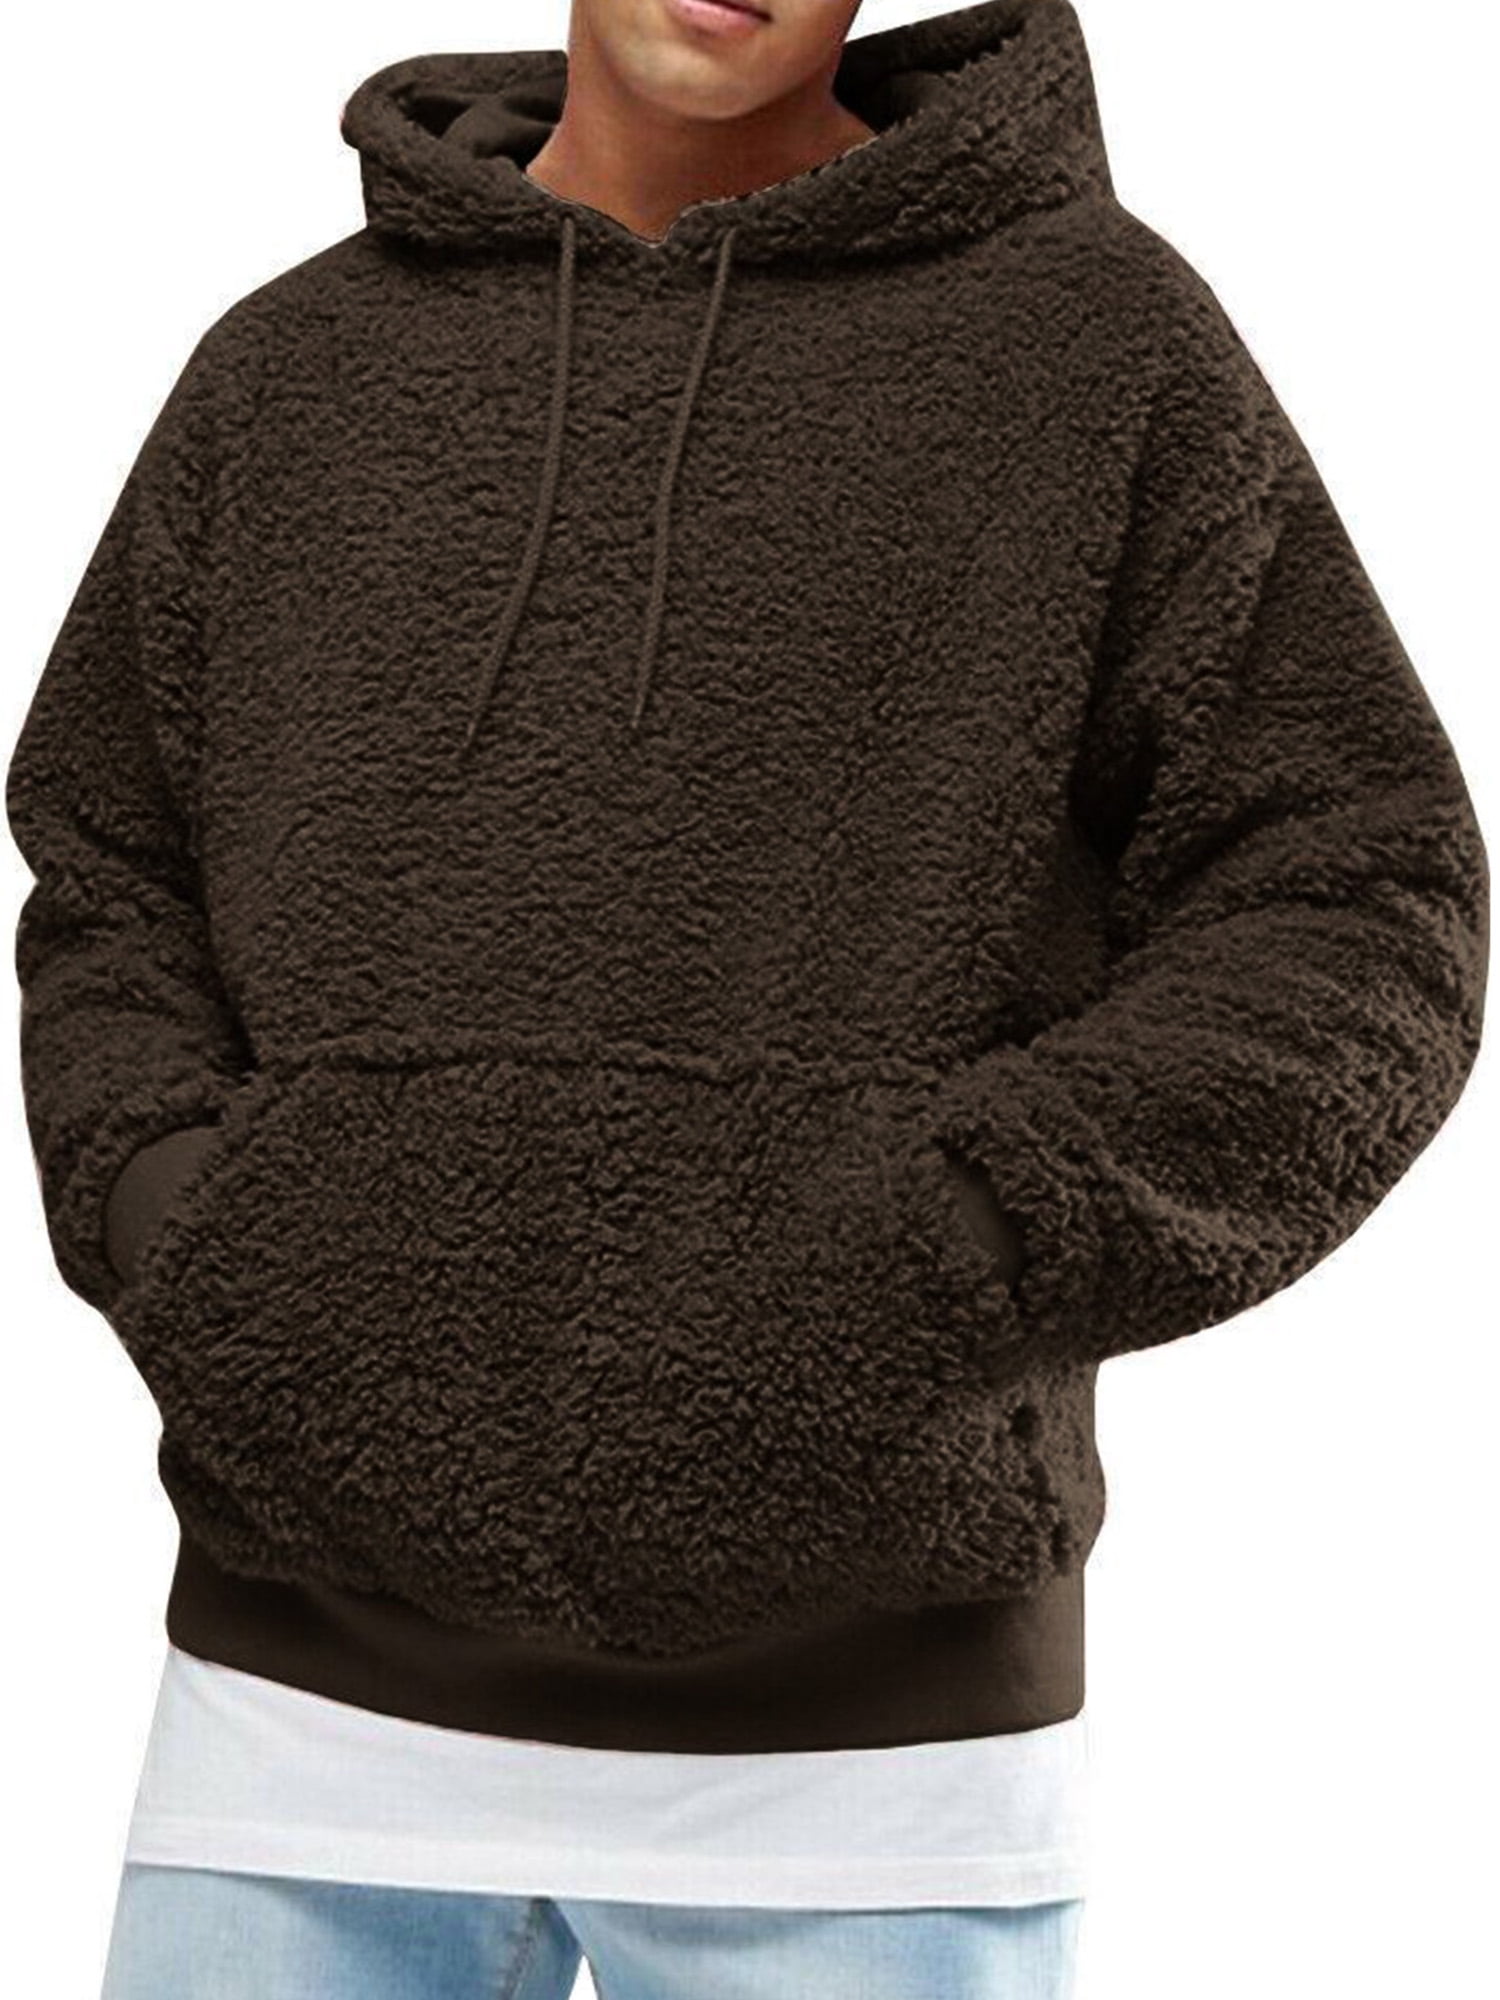 JYYYBF Mens Fuzzy Pullover Hoodie Sherpa Sweatshirt Long Sleeve